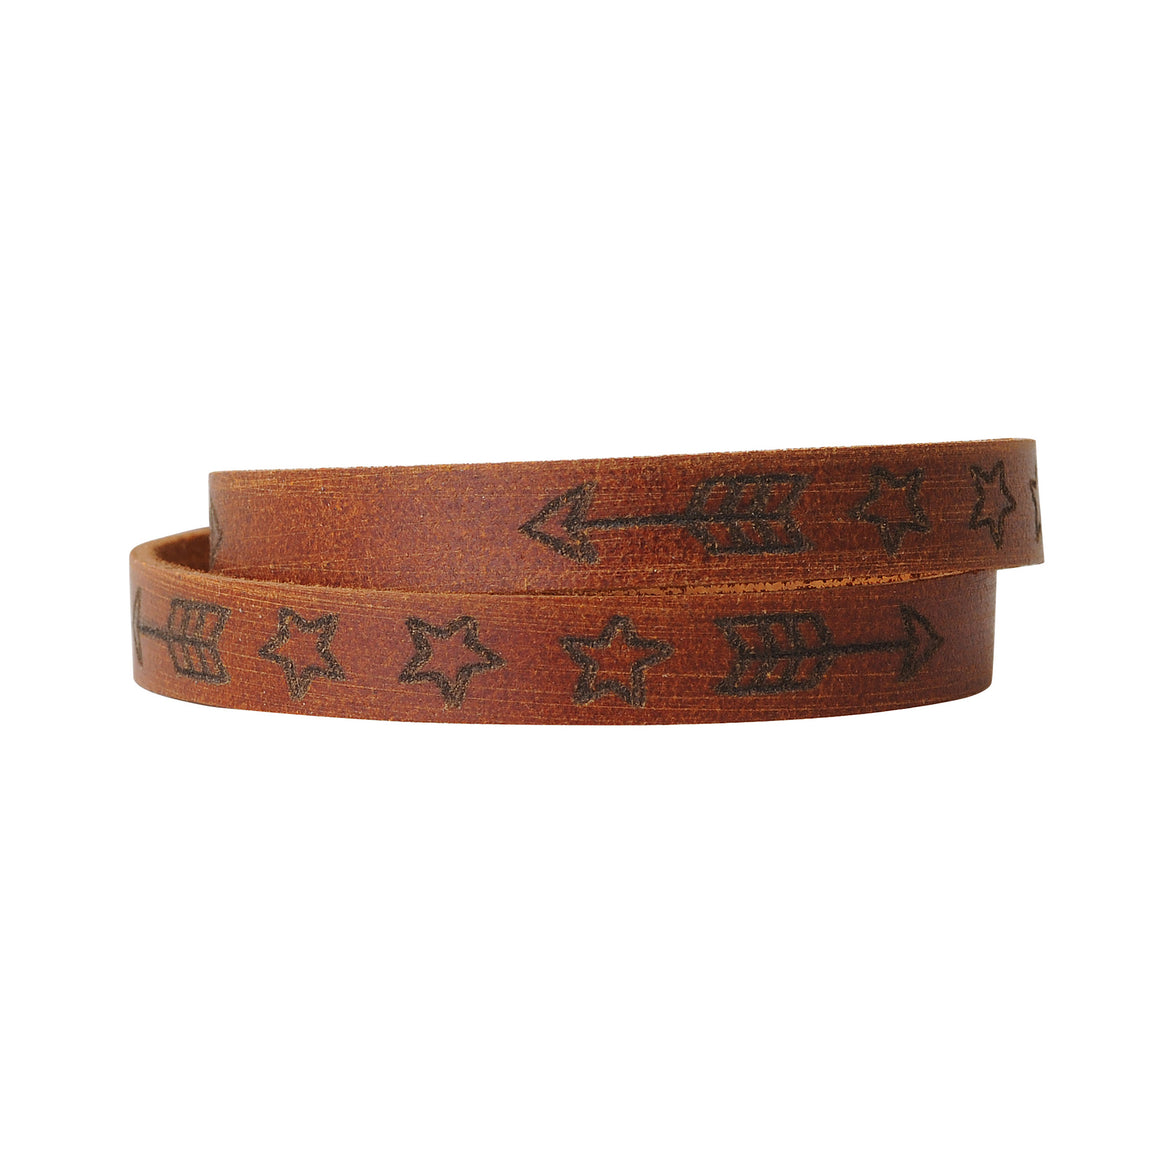 2112 - Arrow and Star tooled bracelet